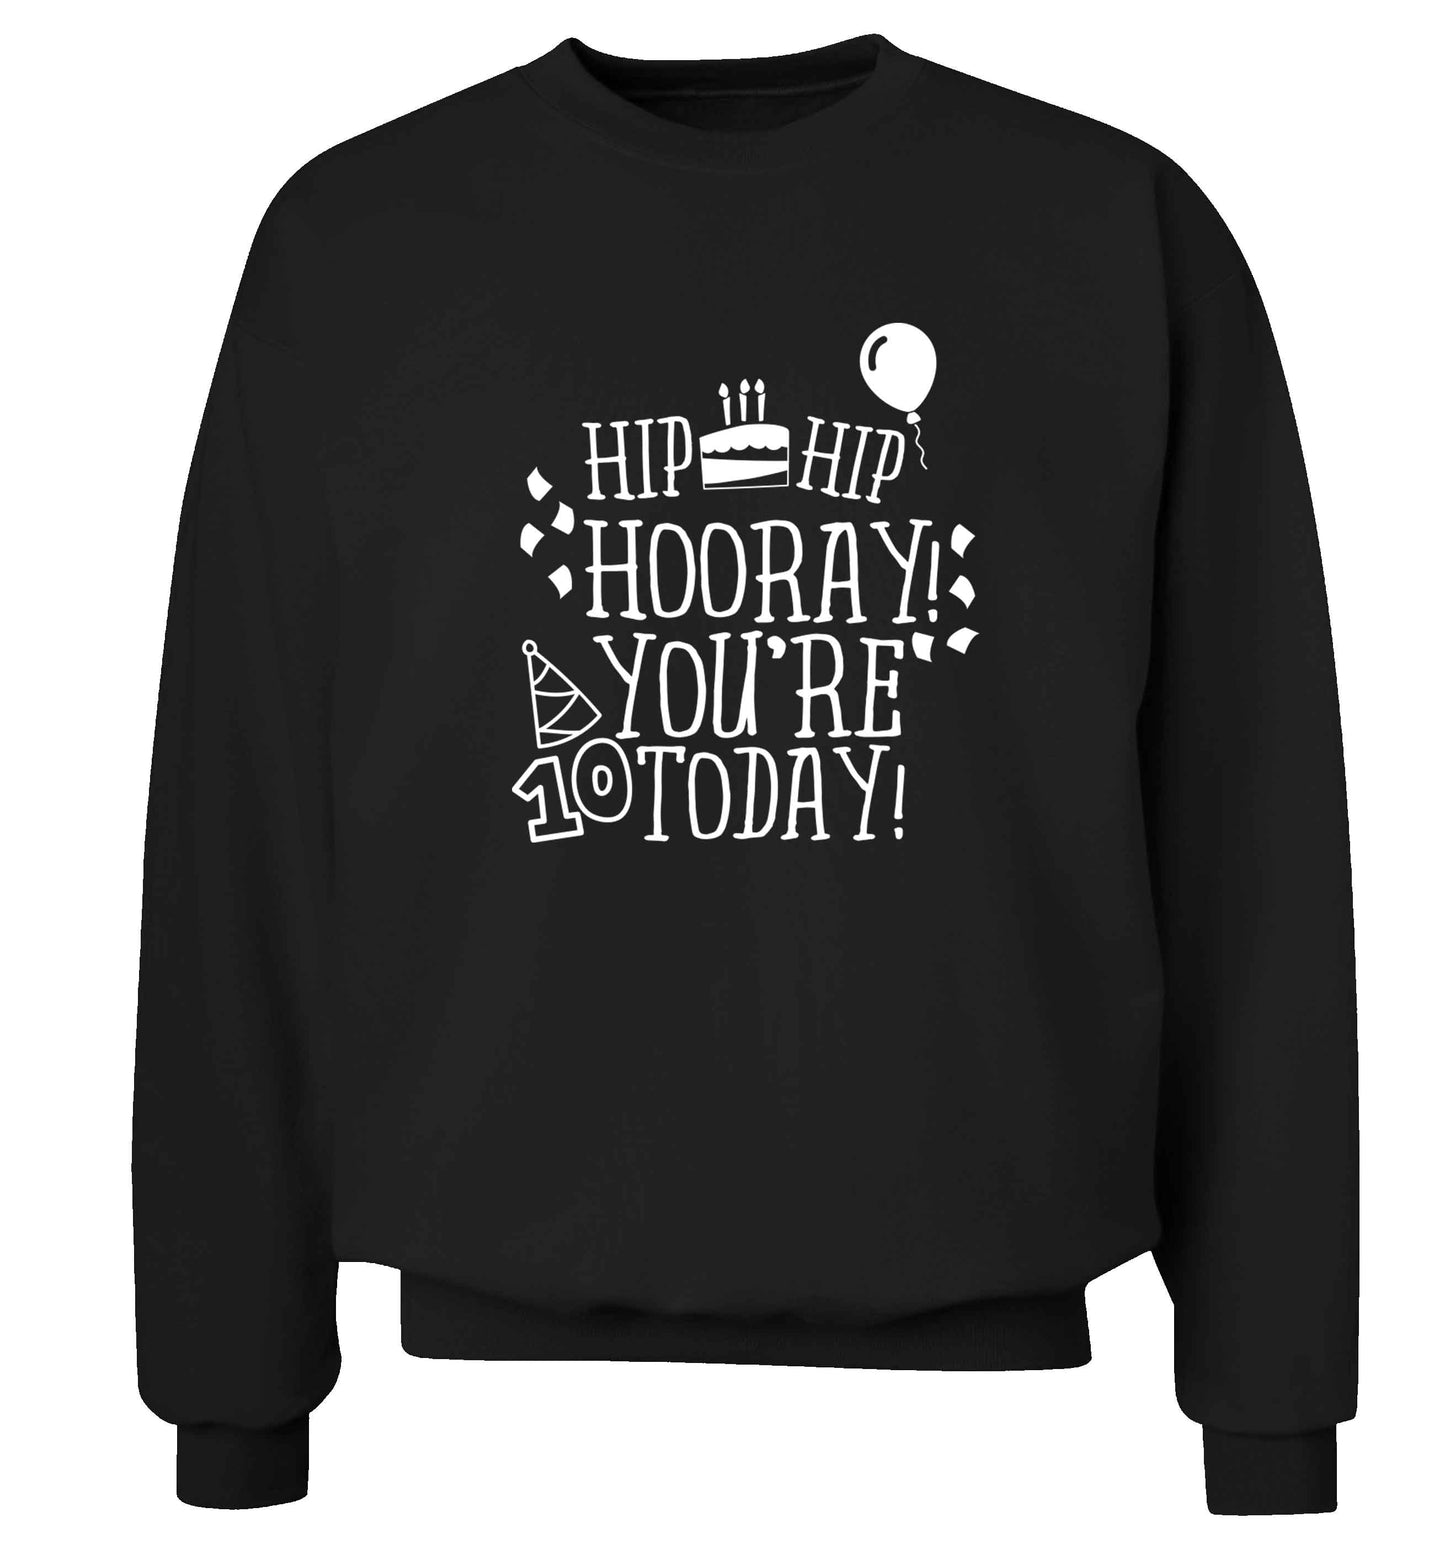 Hip hip hooray you're ten today! adult's unisex black sweater 2XL